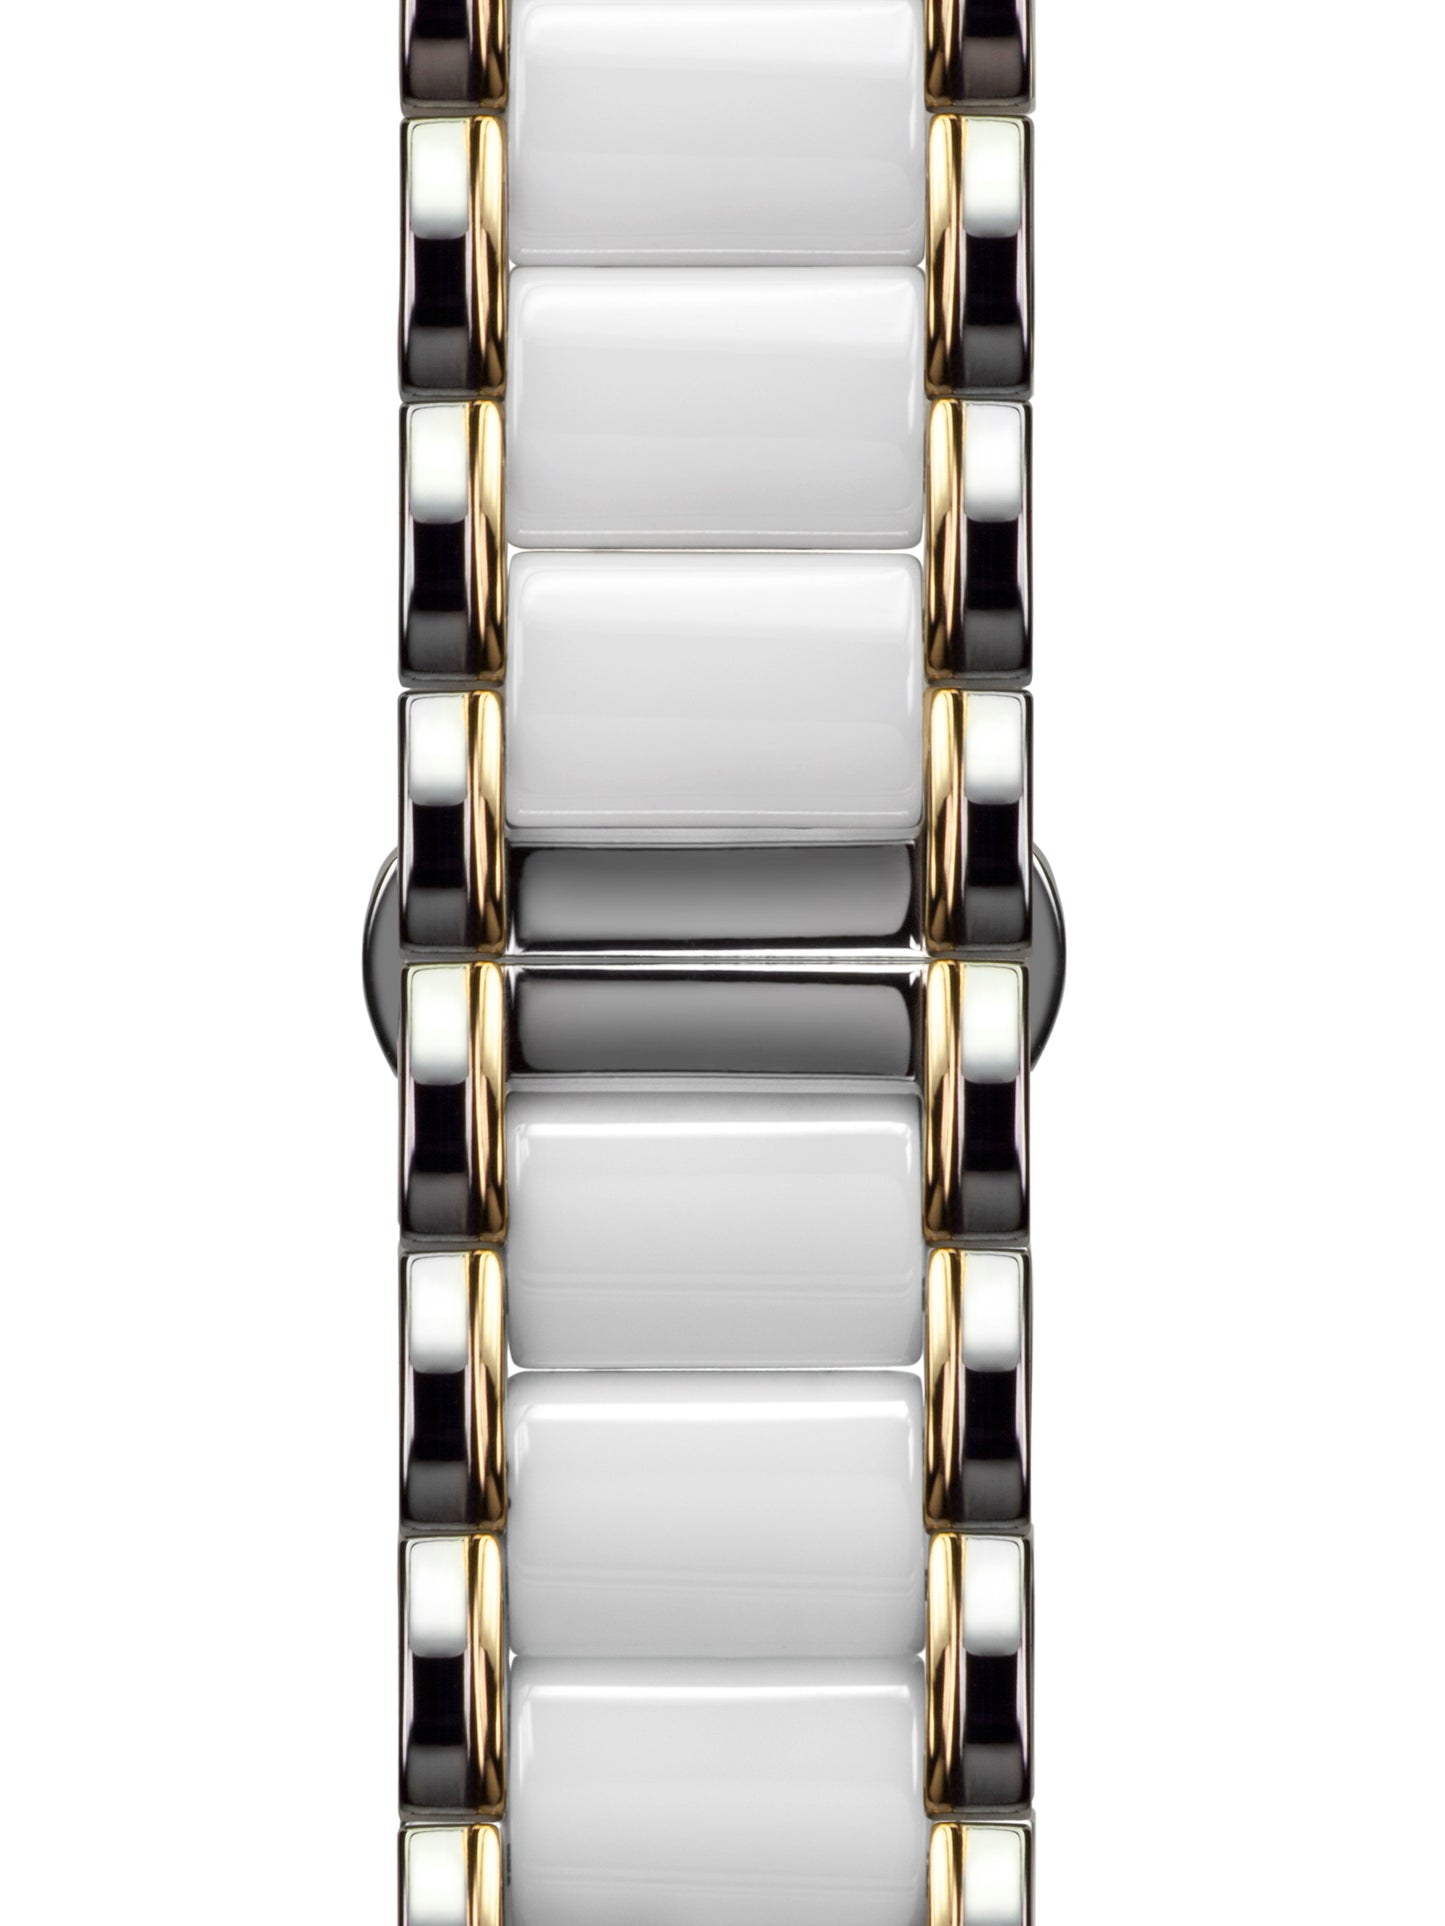 Automatic watches — La Magnifique — Mathis Montabon — Gold weiss Zirkonia II